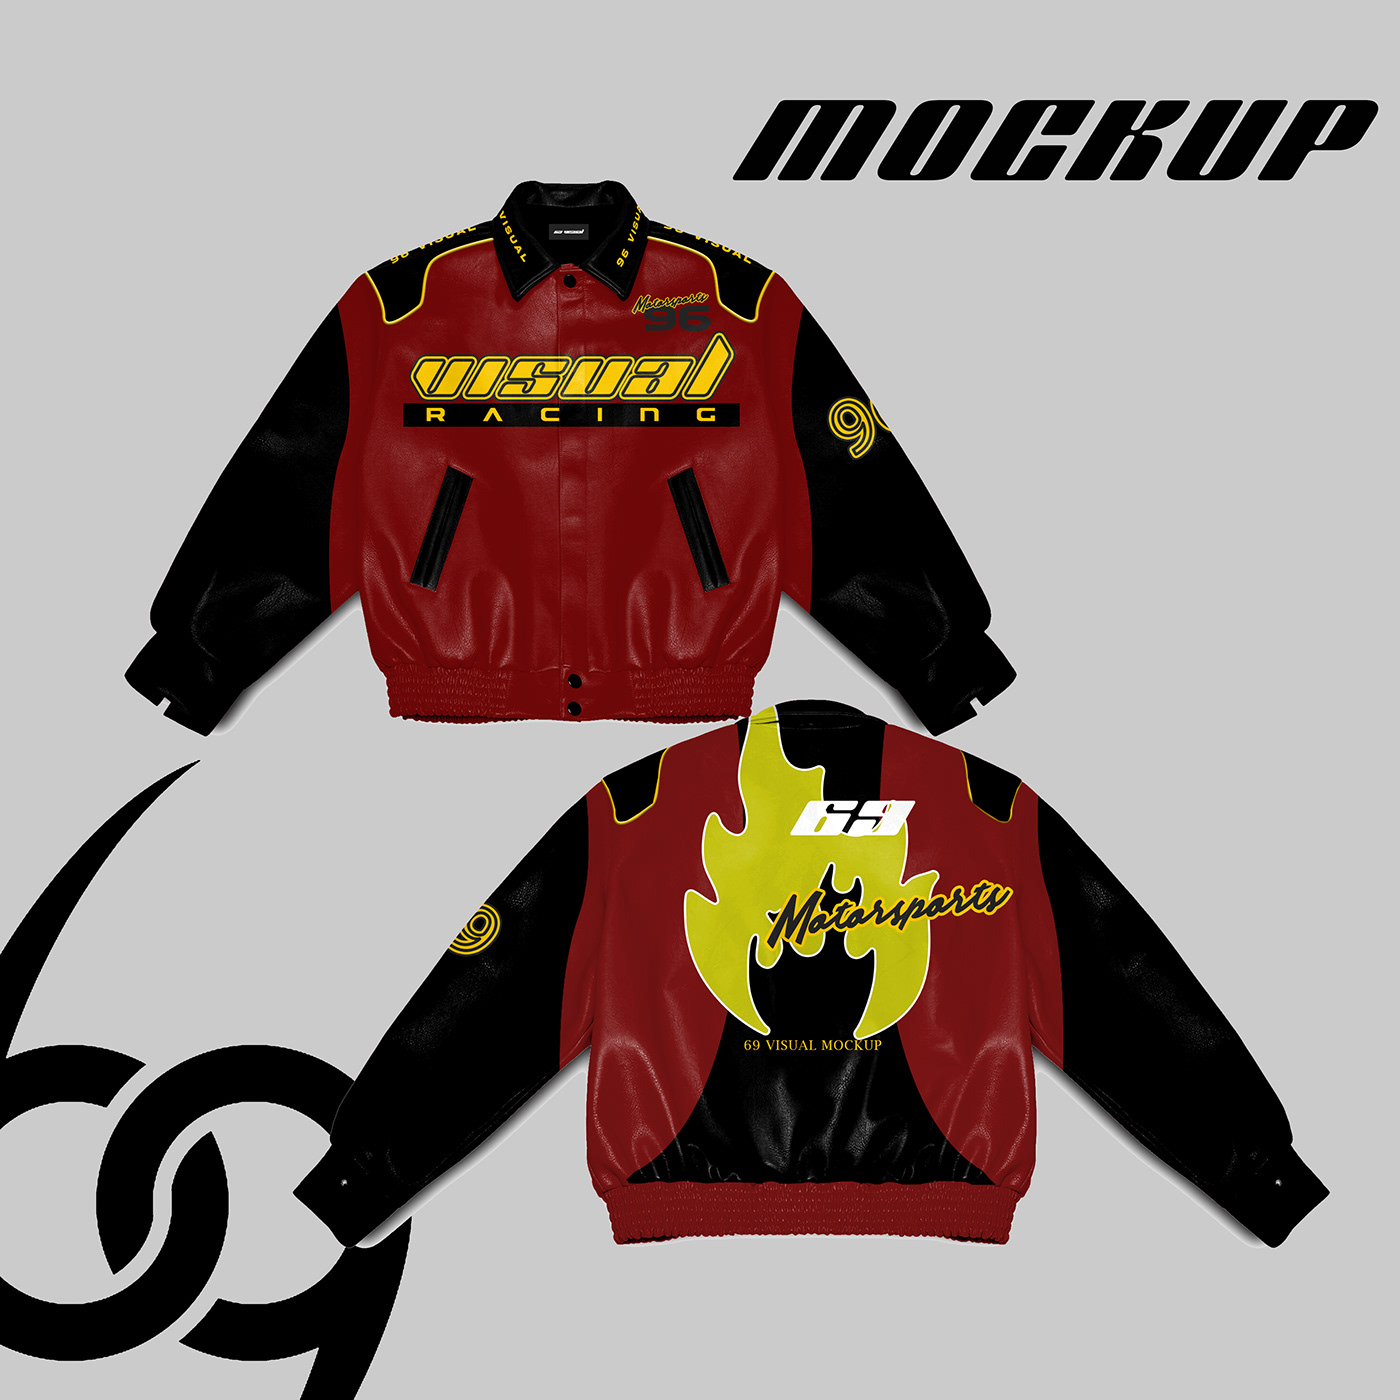 Mockup Mockup Apparel apparel psd Racing jackets